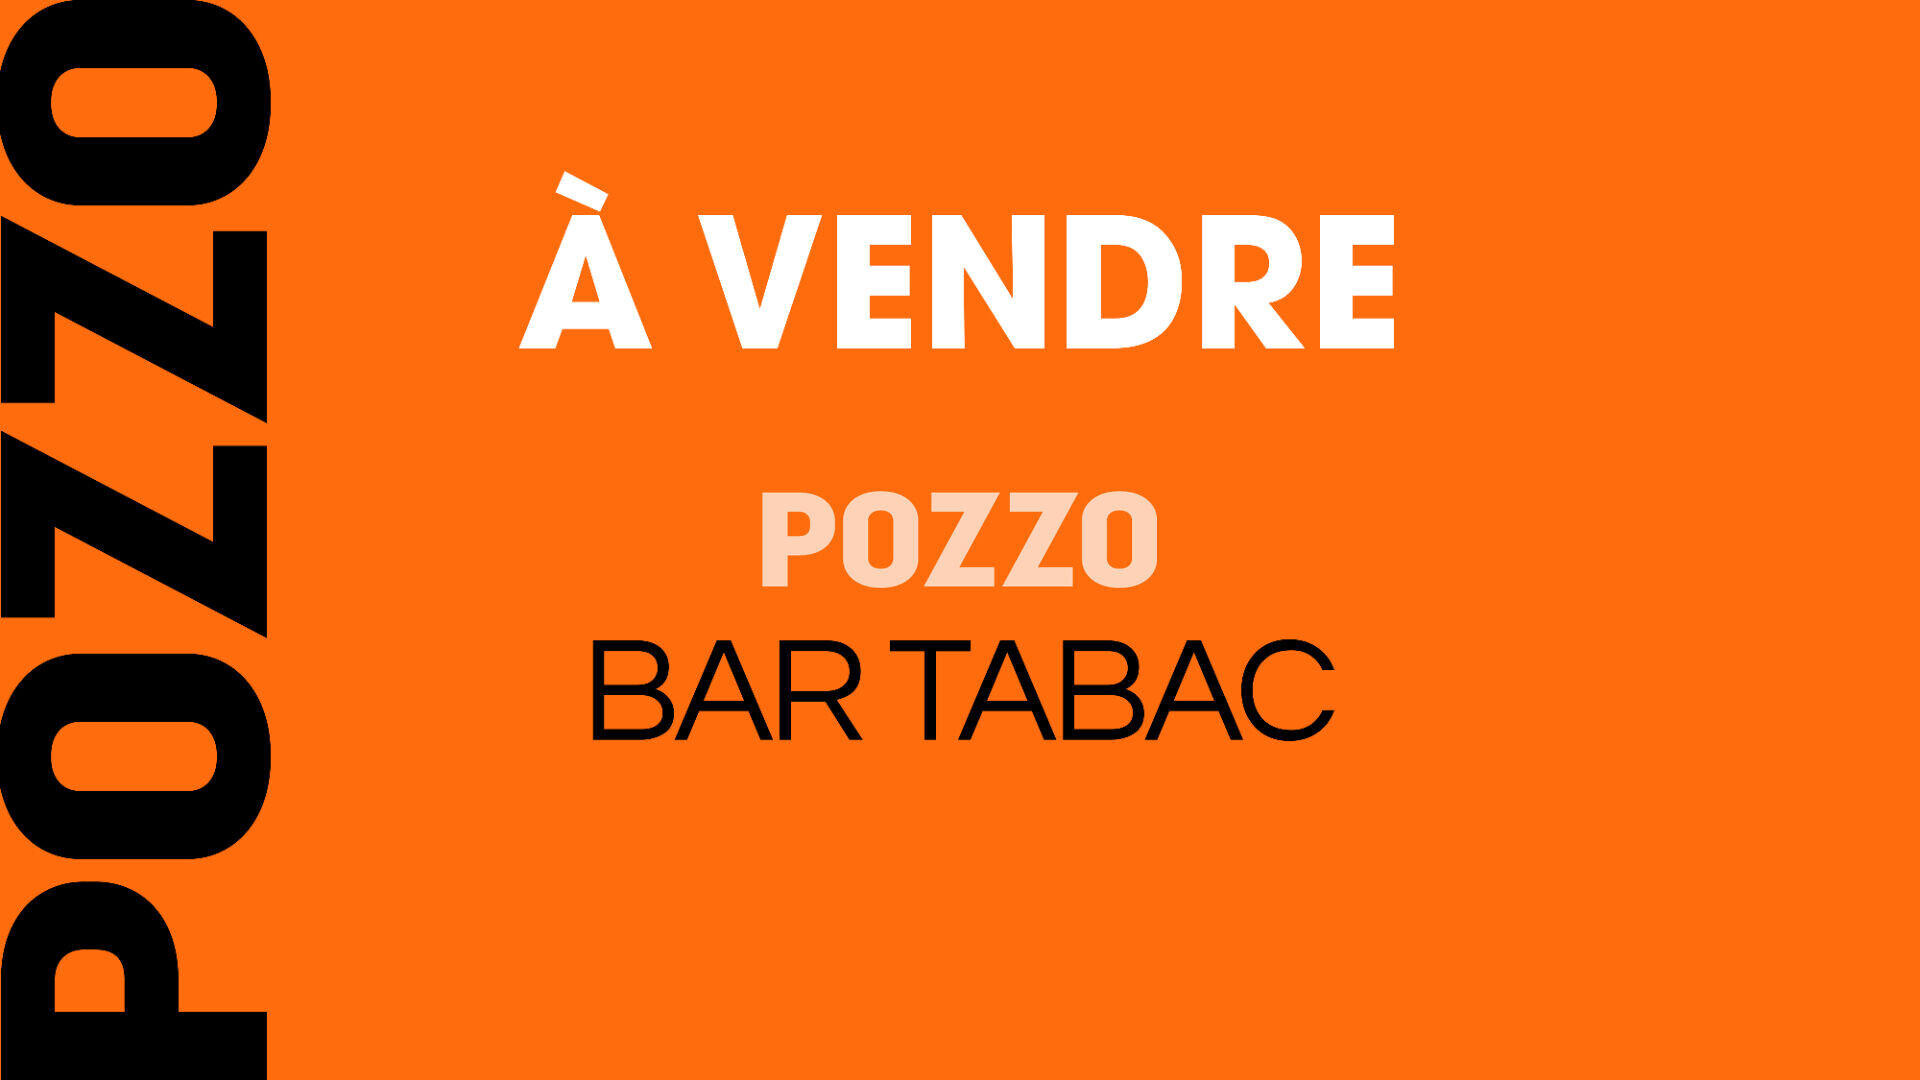 Bar Tabac FDJ Presse à vendre près de Caen (14)